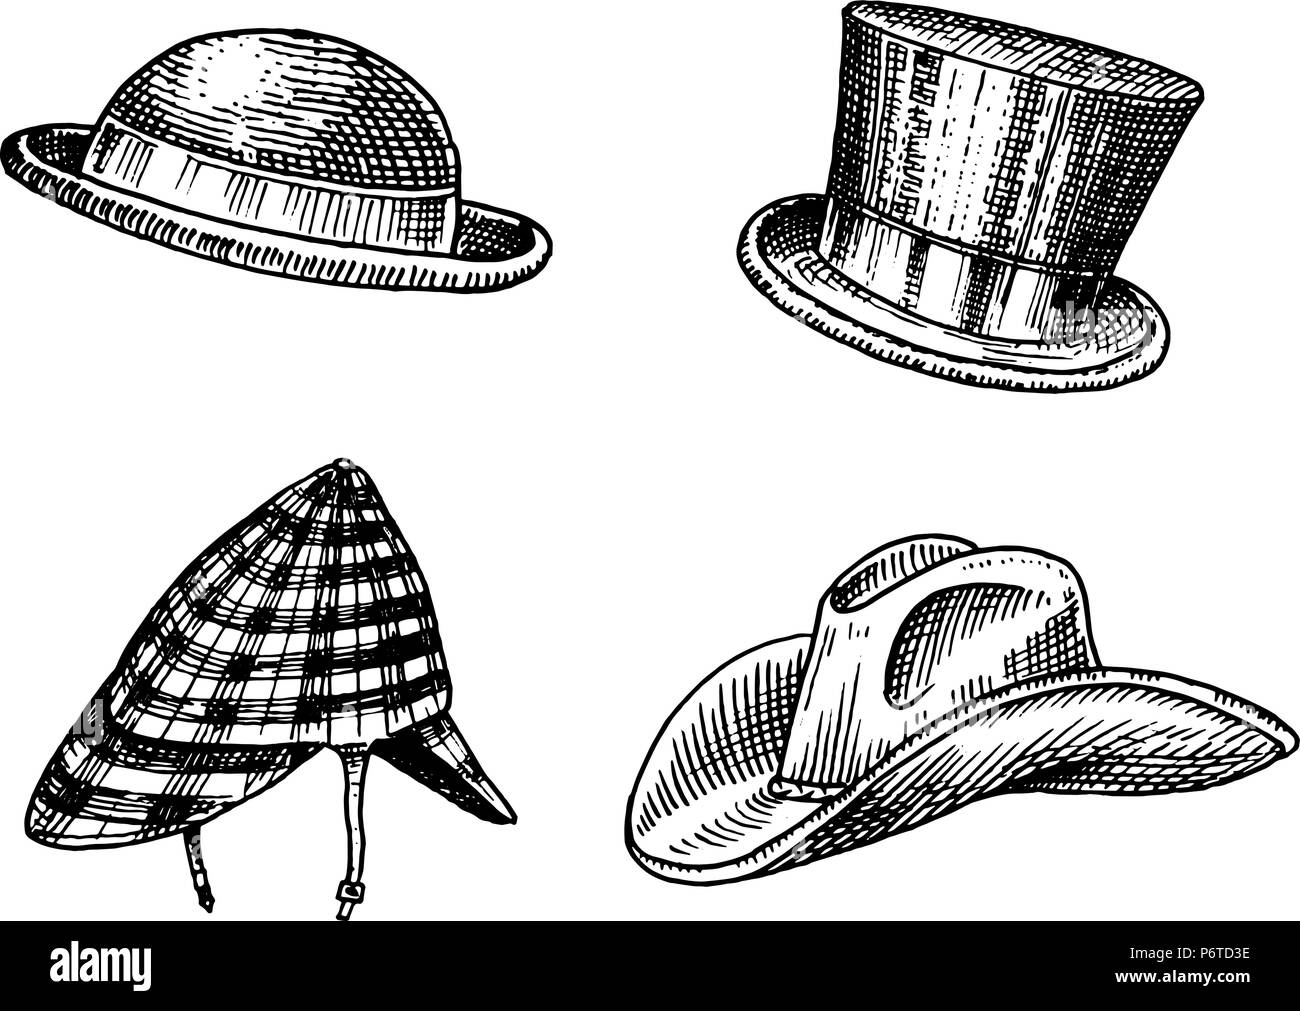 Summer vintage Hats collection for elegant men. Fedora Derby Deerstalker Homburg Bowler Straw Beret Captain Cowboy Porkpie Boater Peaked cap. Retro fashion set. English style. Hand drawn sketch. Stock Vector